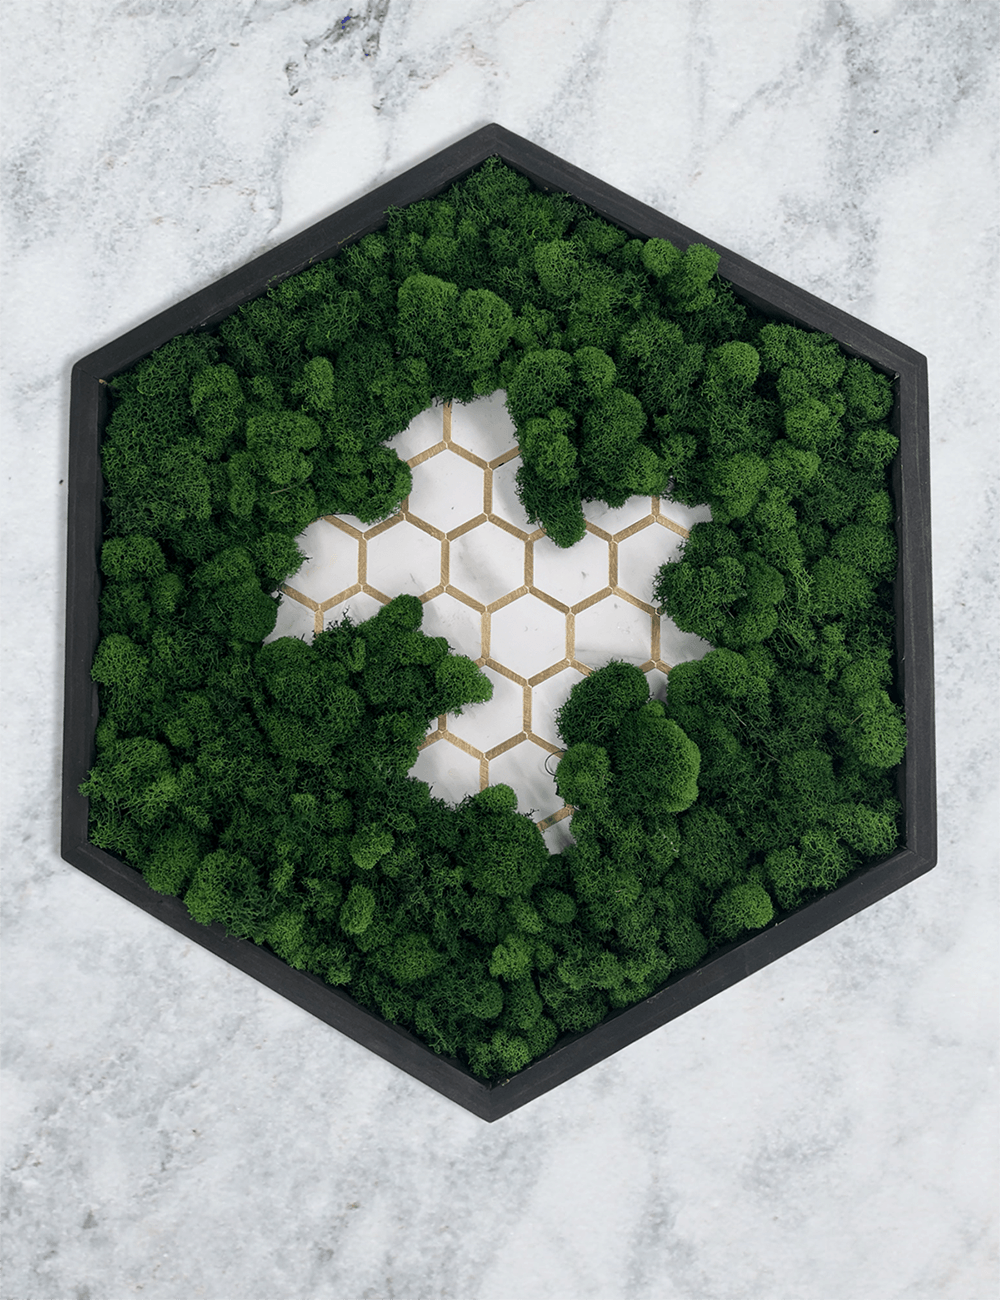 Tiled Hexagon Moss Wall Art - MossFusion